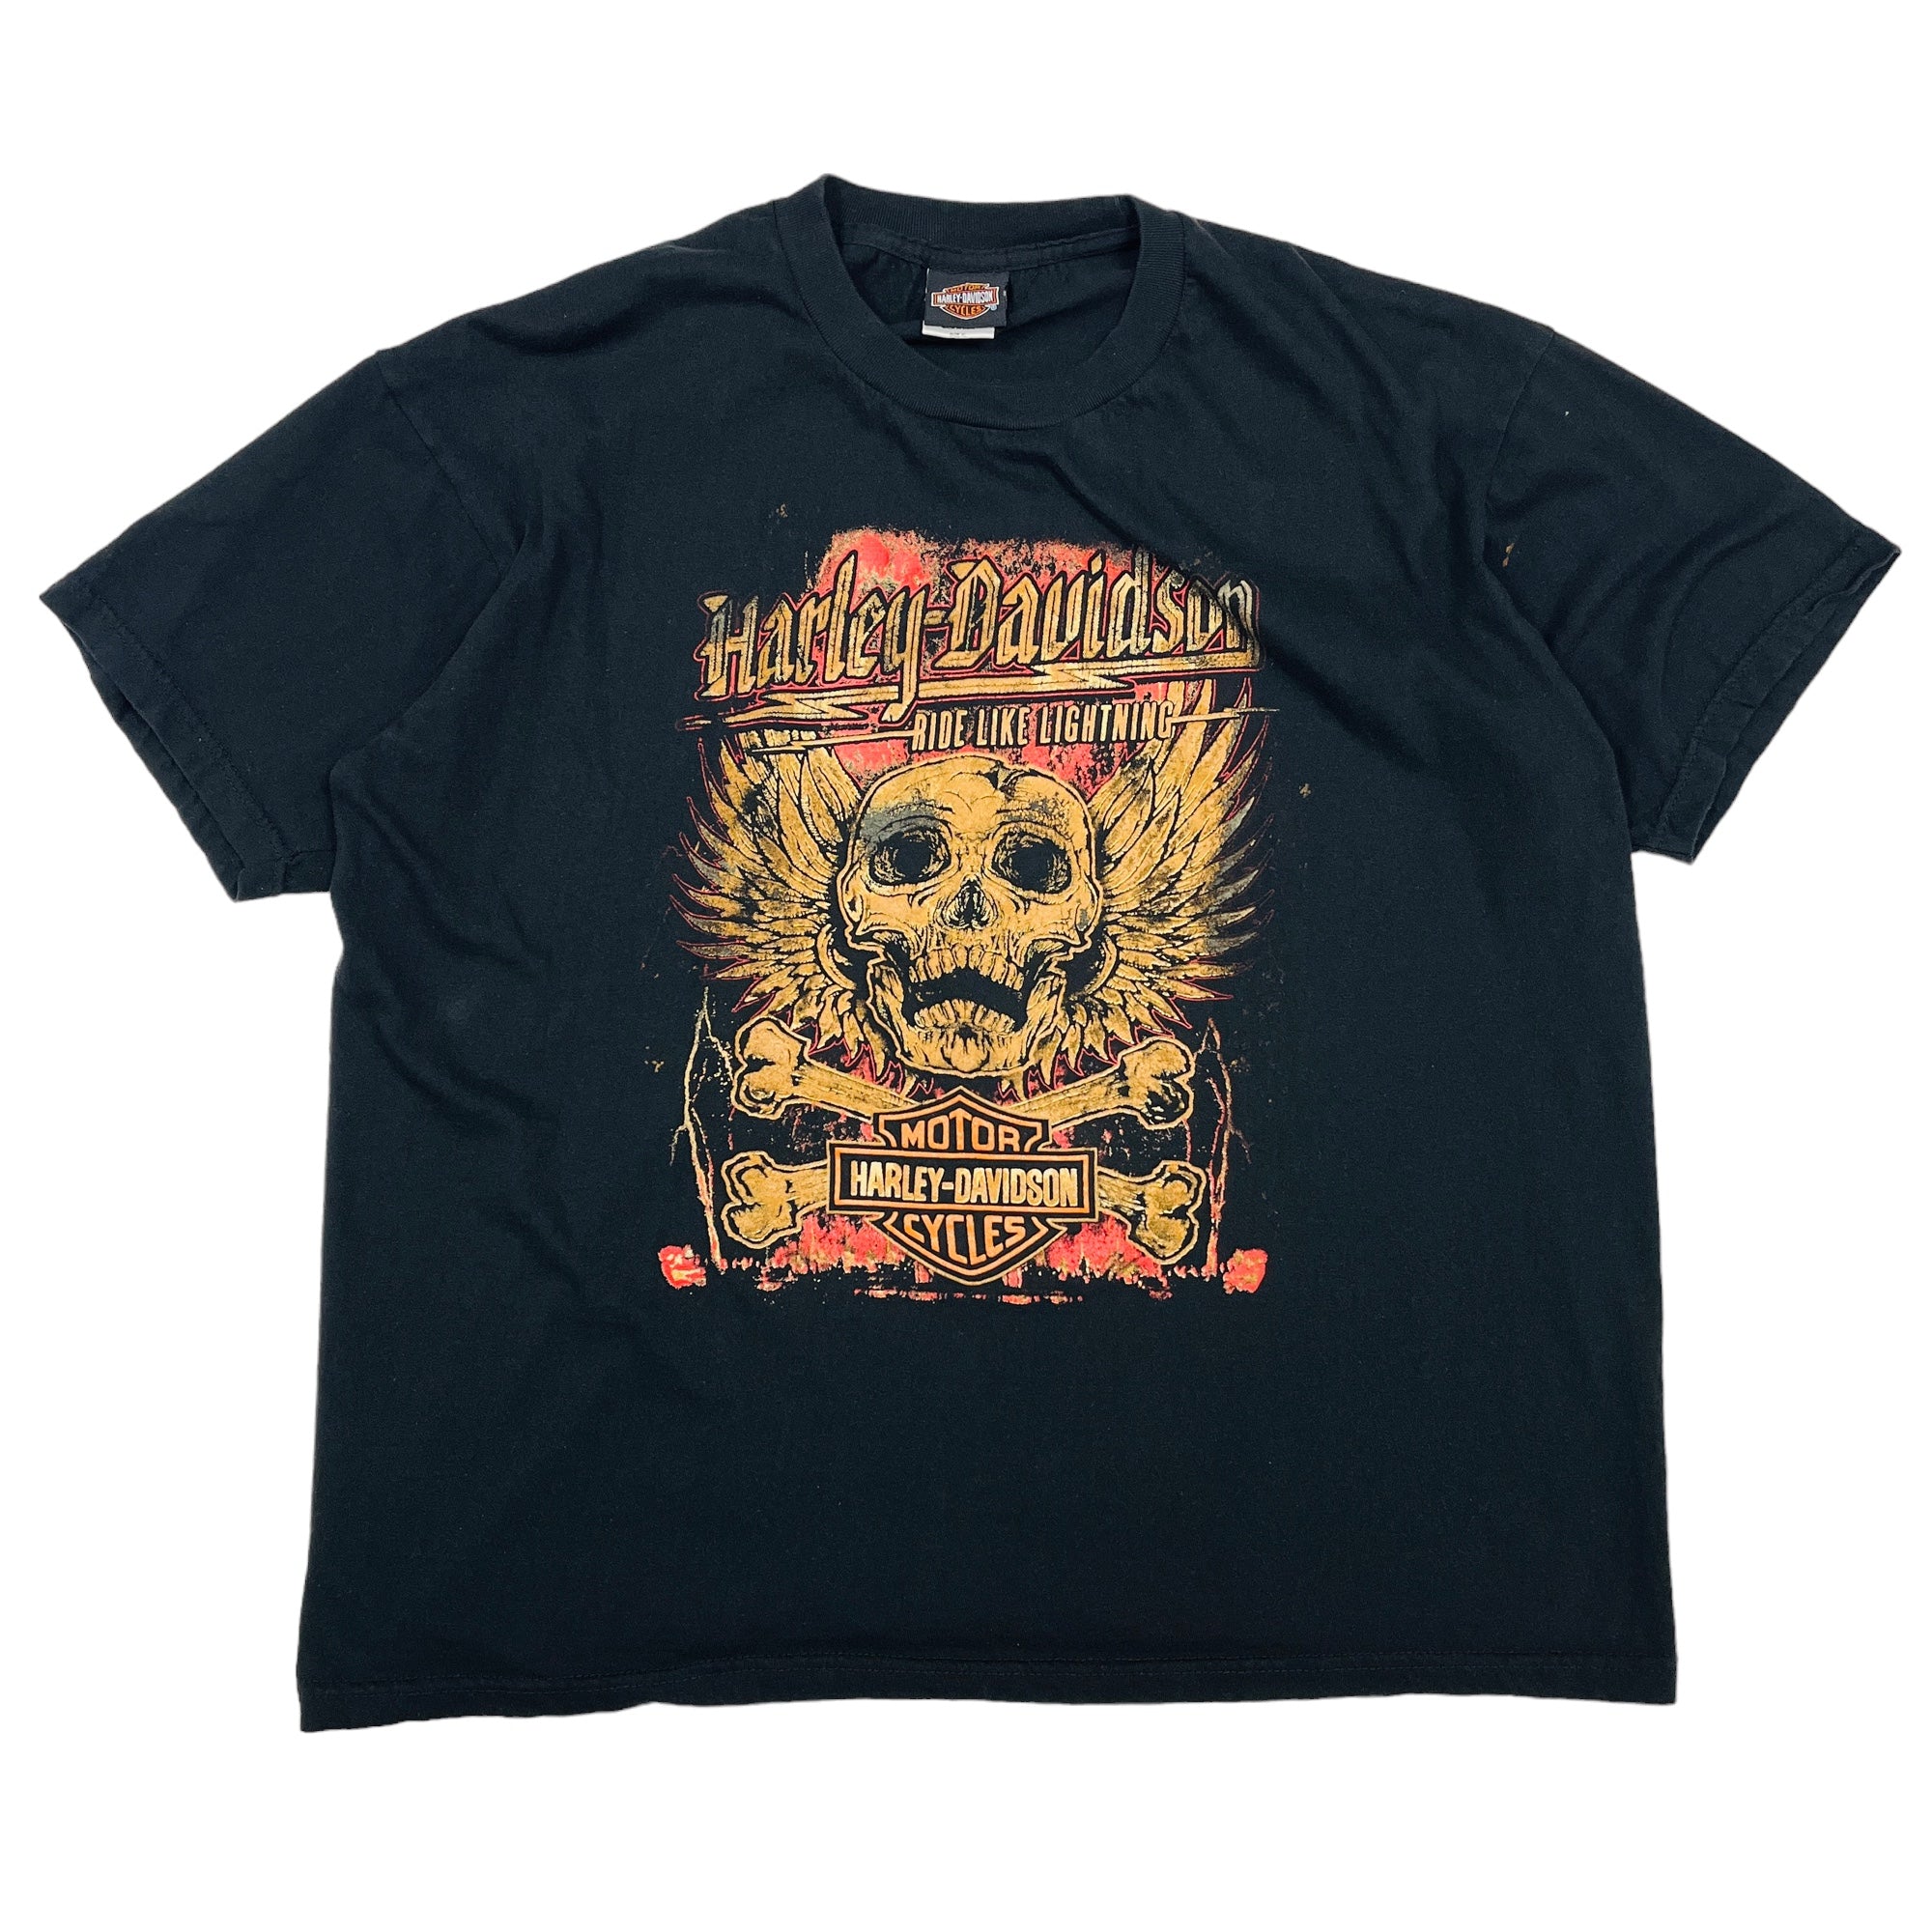 Harley Davidson Ride Like Lighting Graphic T-Shirt - XL